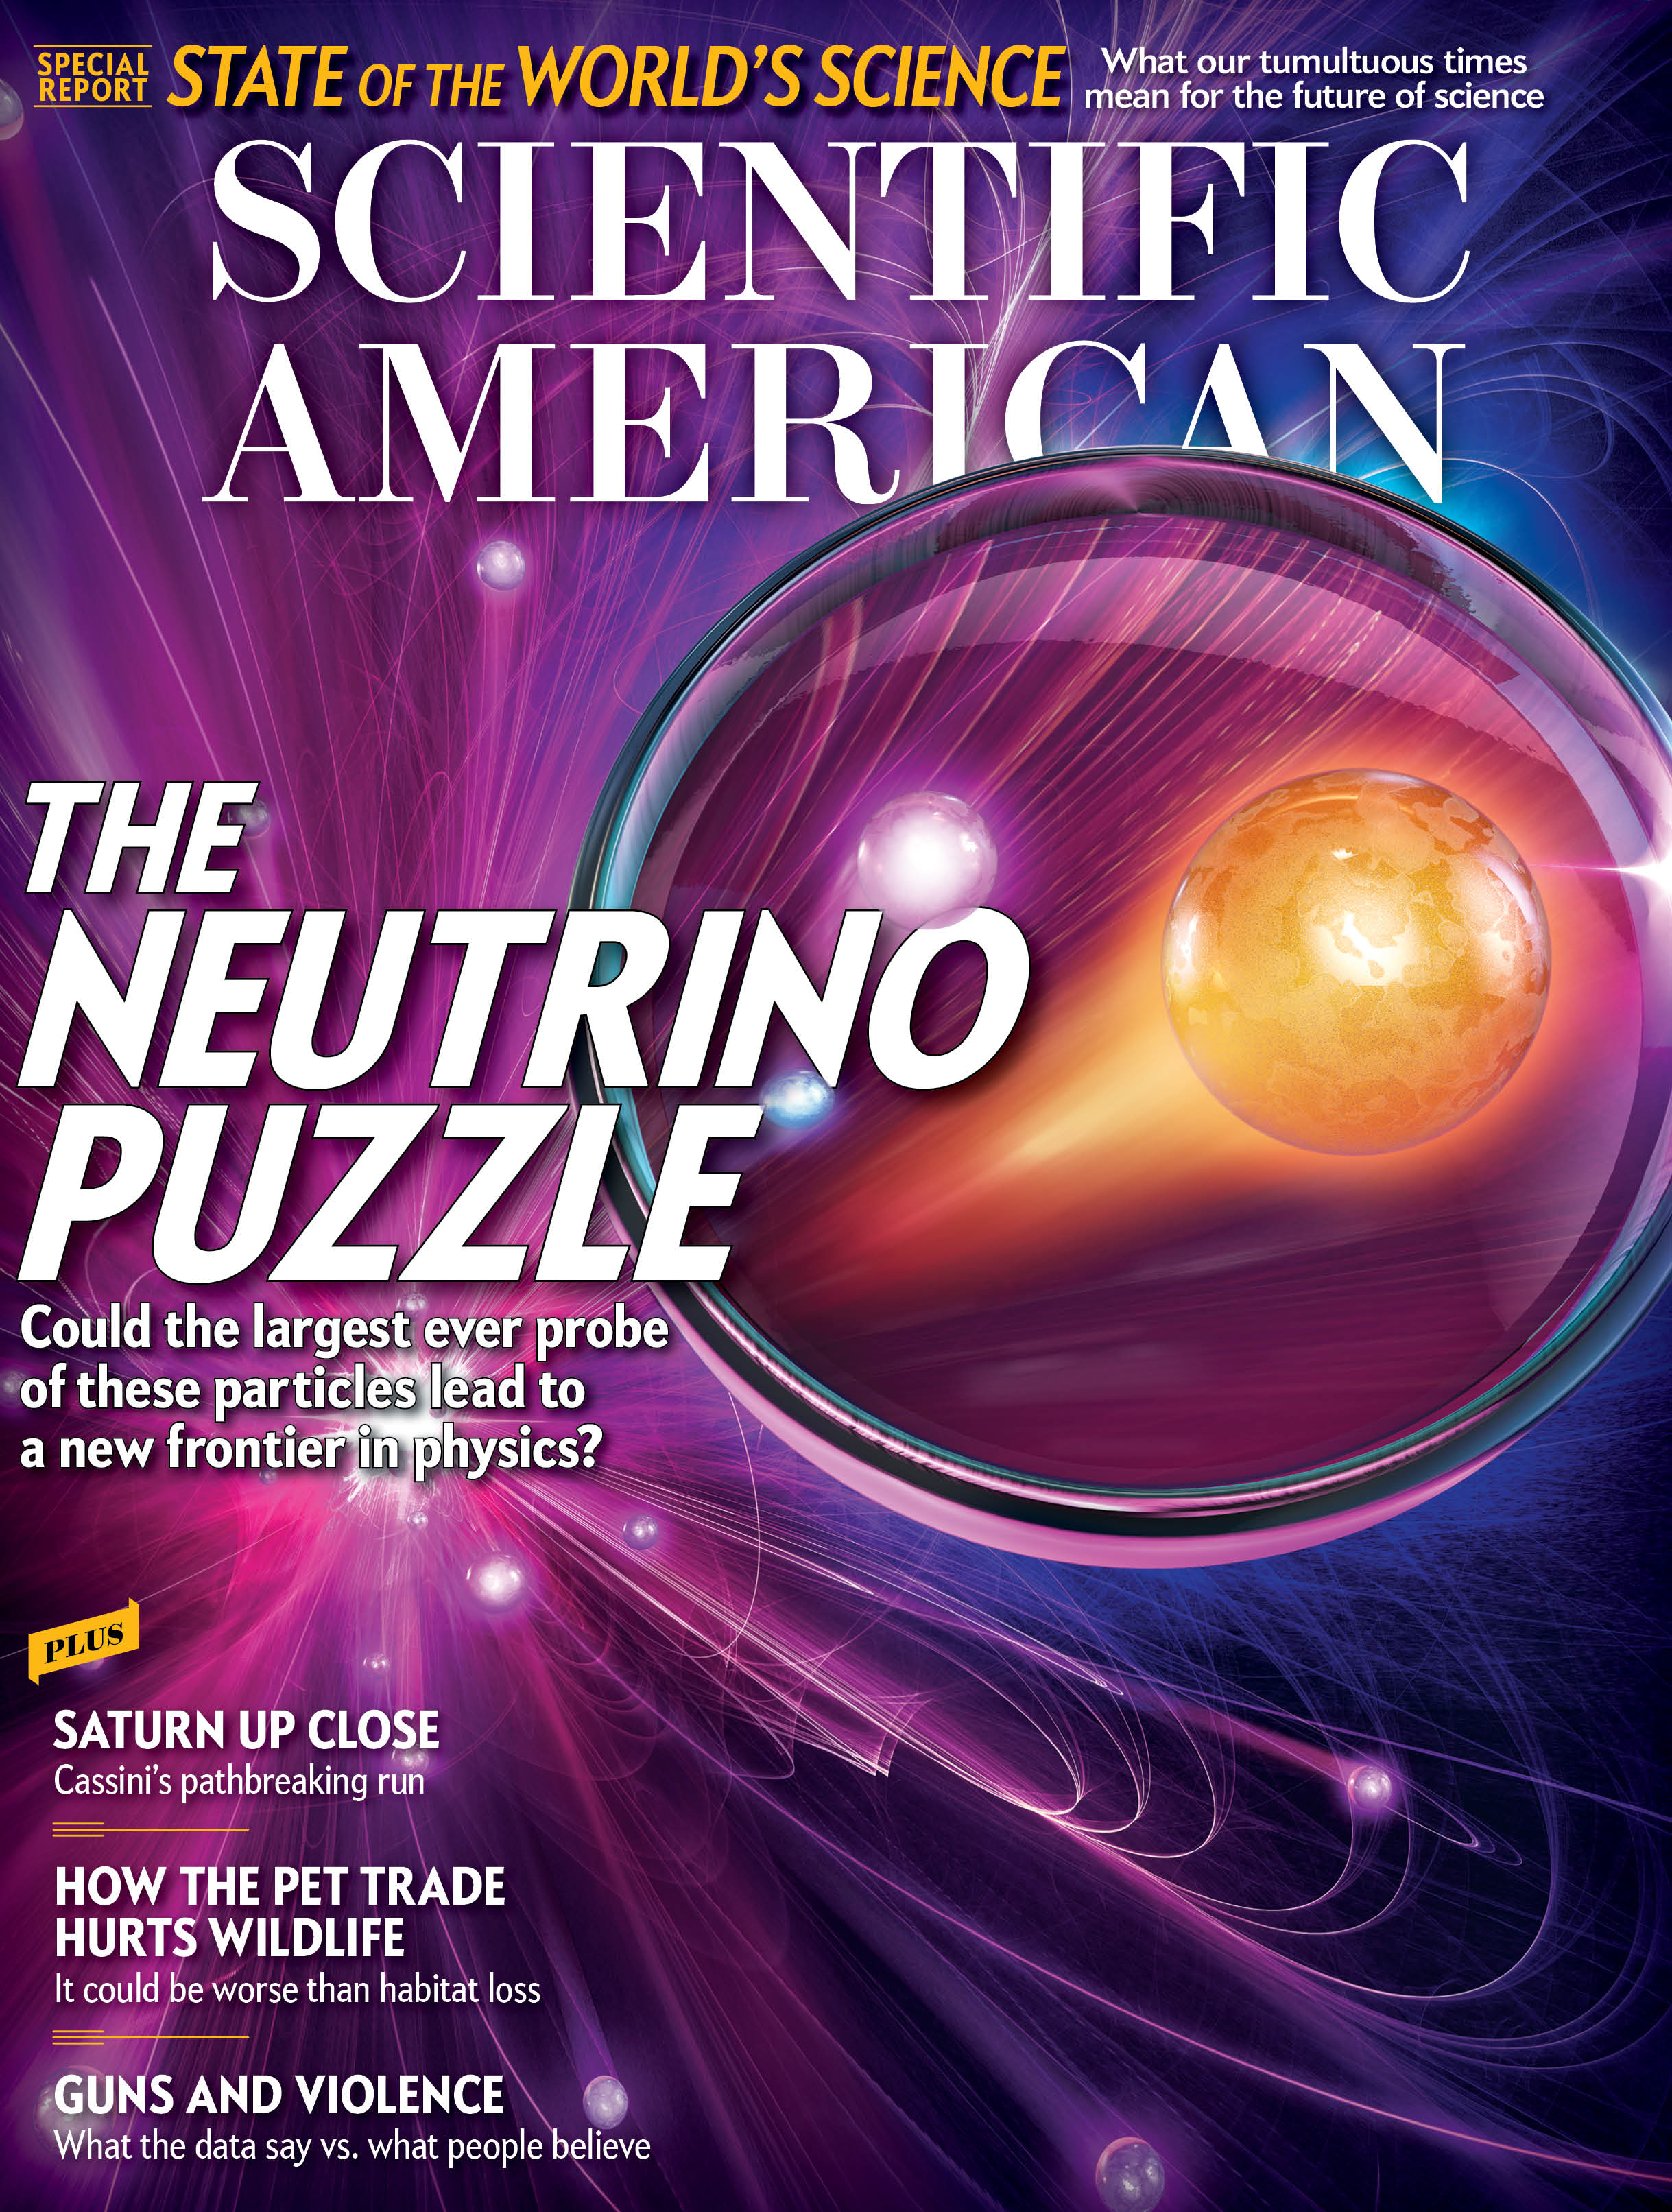 Scientific American Magazine Vol 317 Issue 4